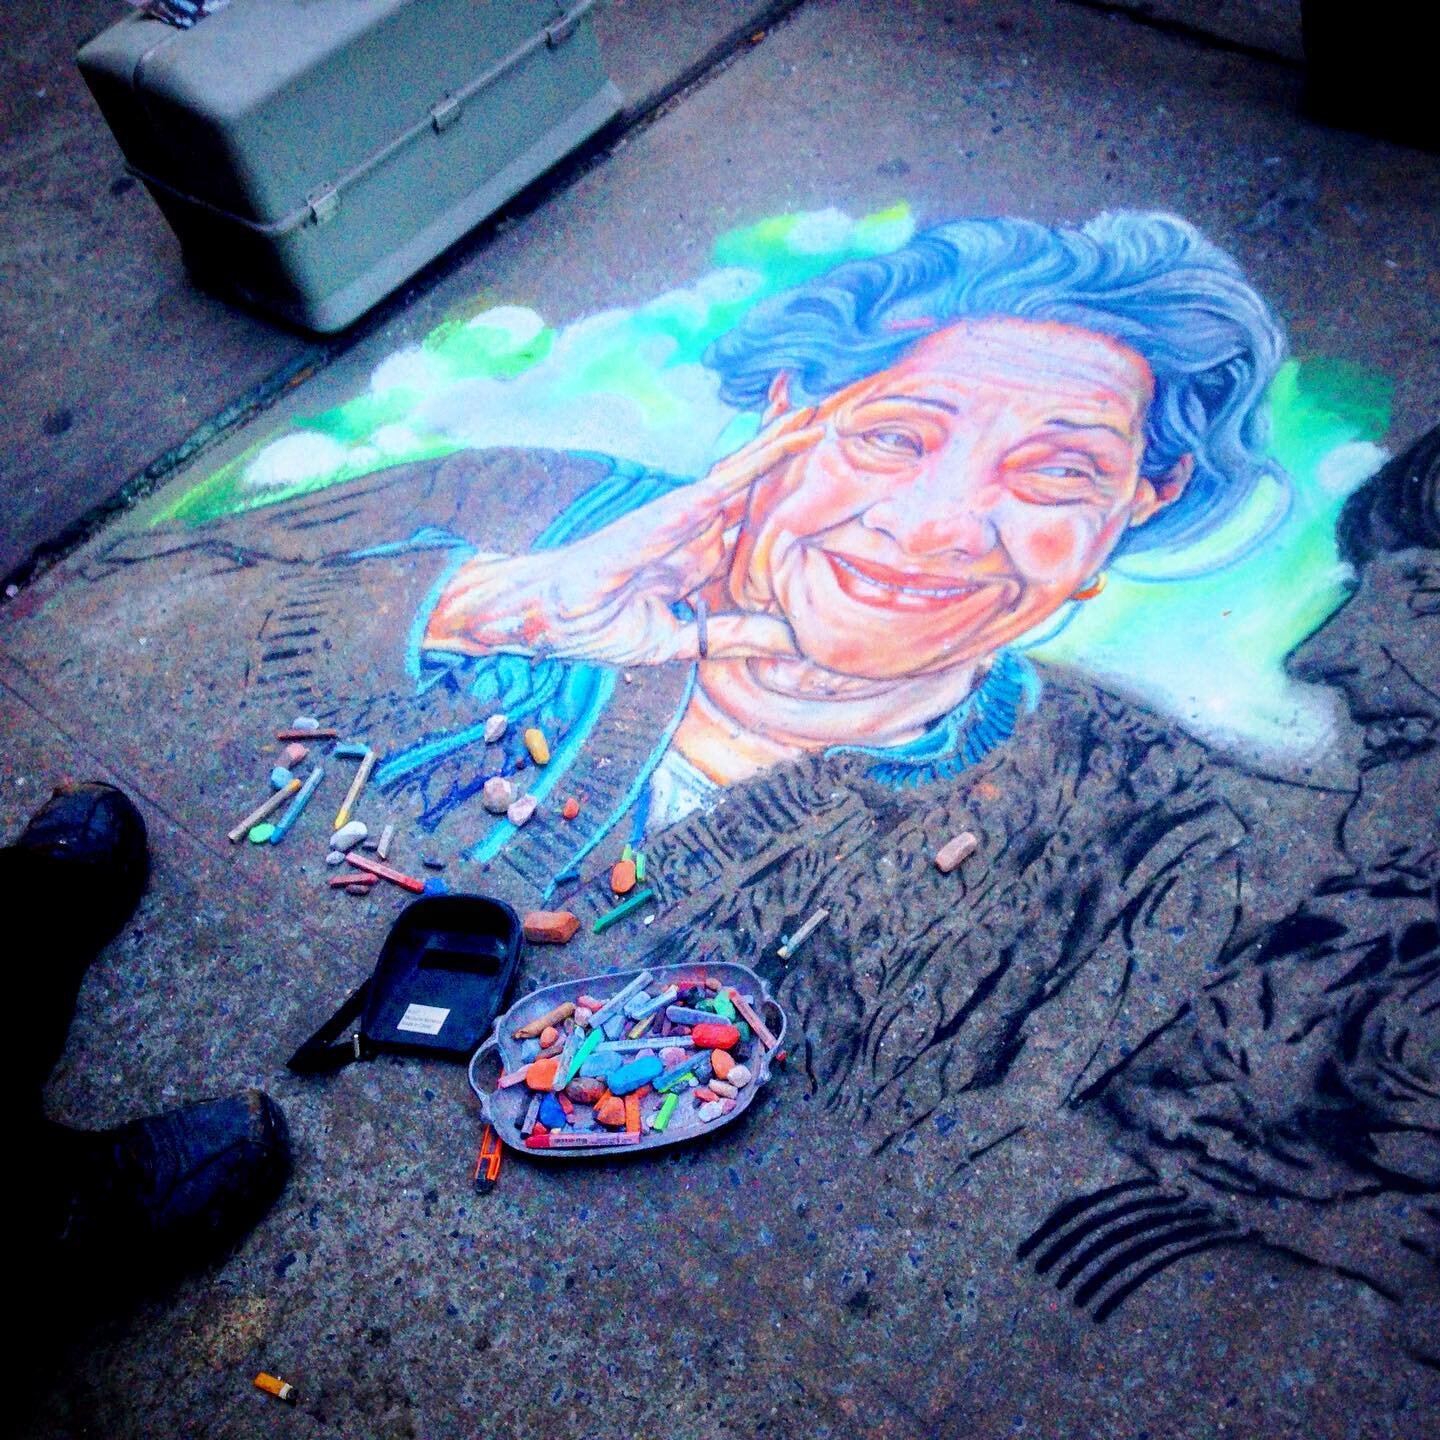 Art at your feet. #nyc #newyork #newyorkcity